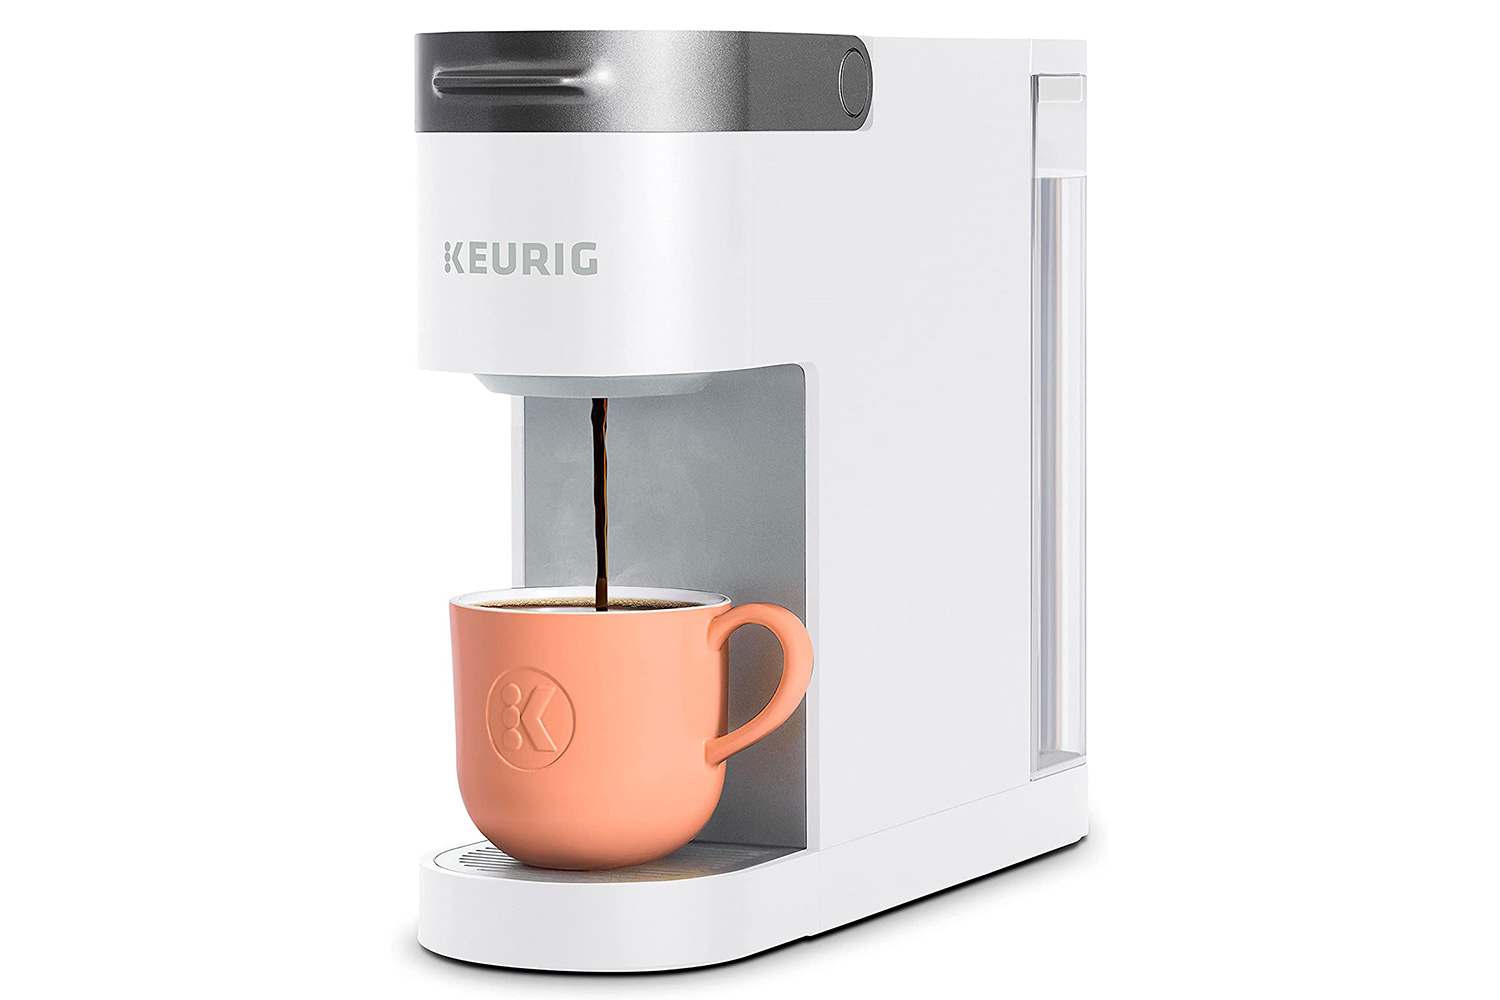 https://www.themanual.com/wp-content/uploads/sites/9/2021/10/keurig-k-slim-coffee-maker.jpg?fit=800%2C800&p=1